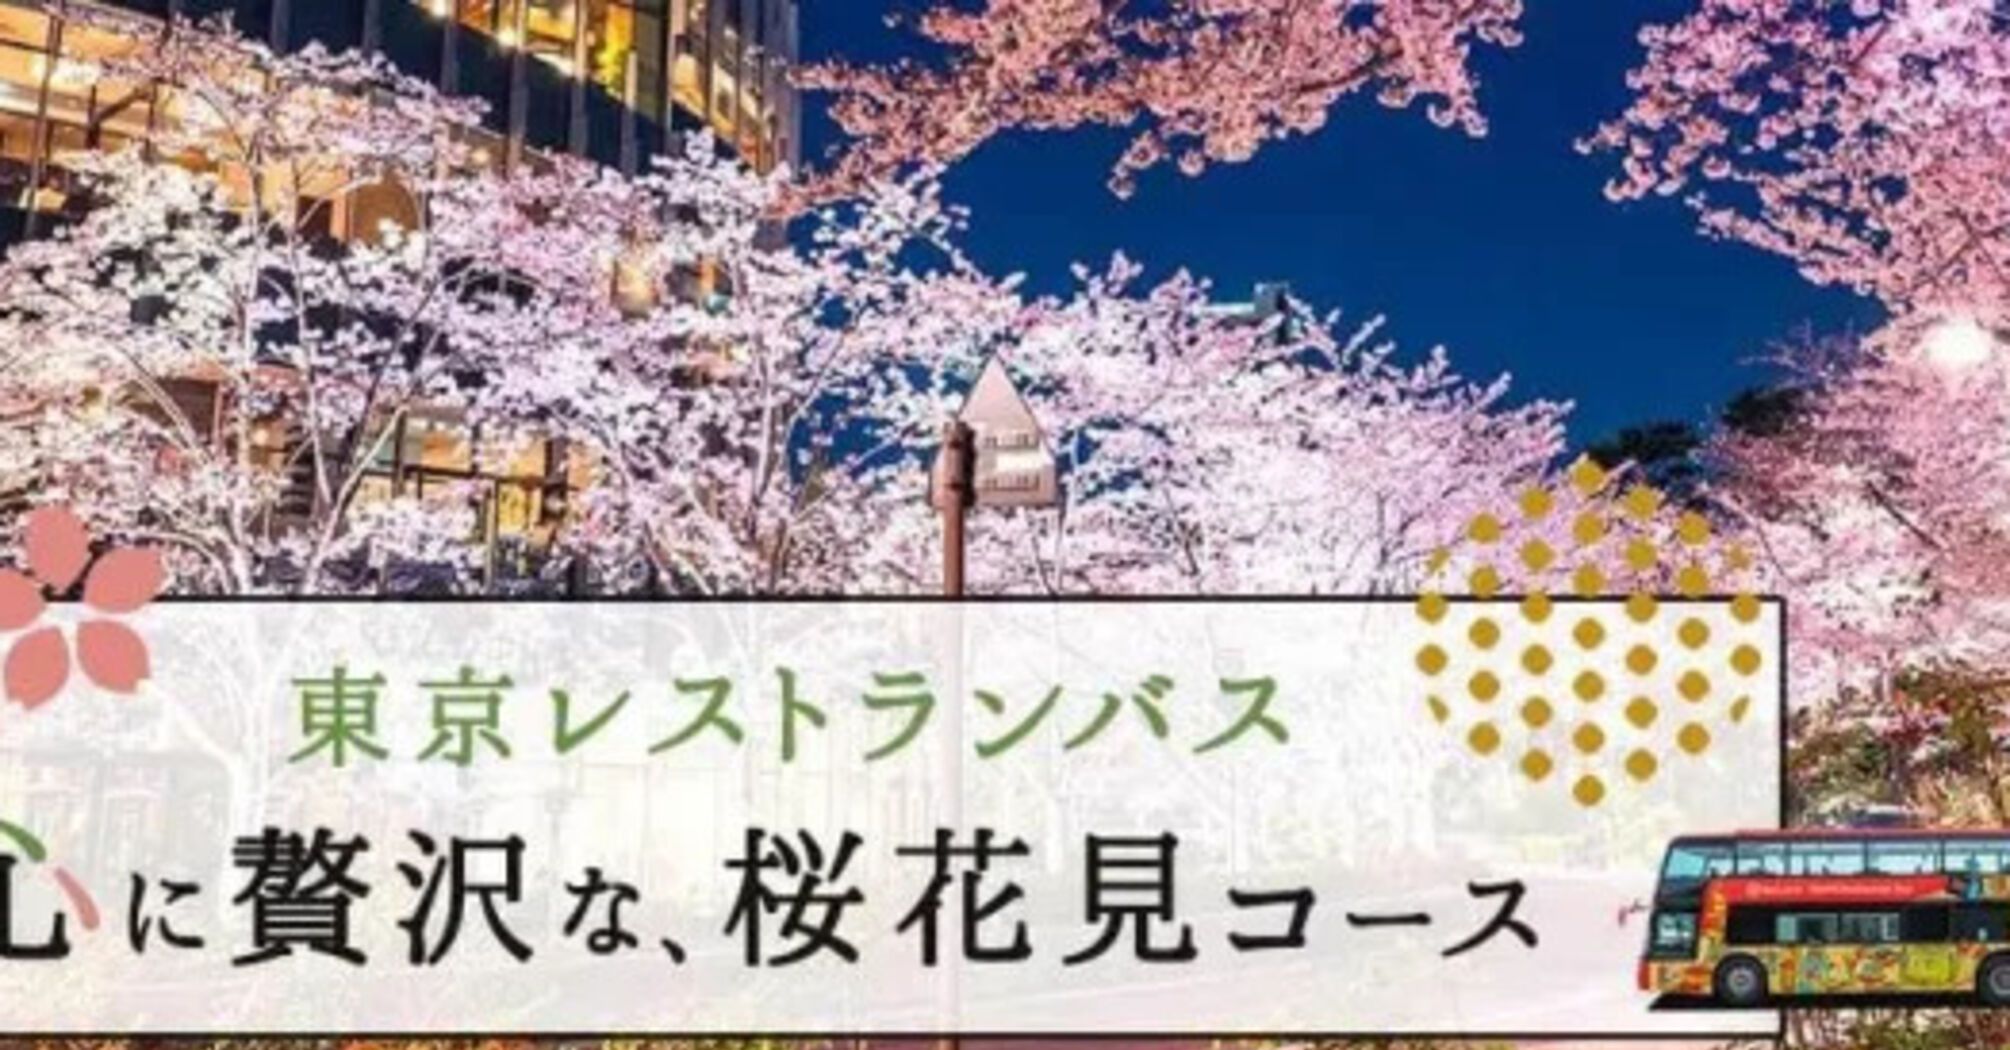 Restaurant Bus Tokyo: Enjoy the blooming sakura and exquisite cuisine